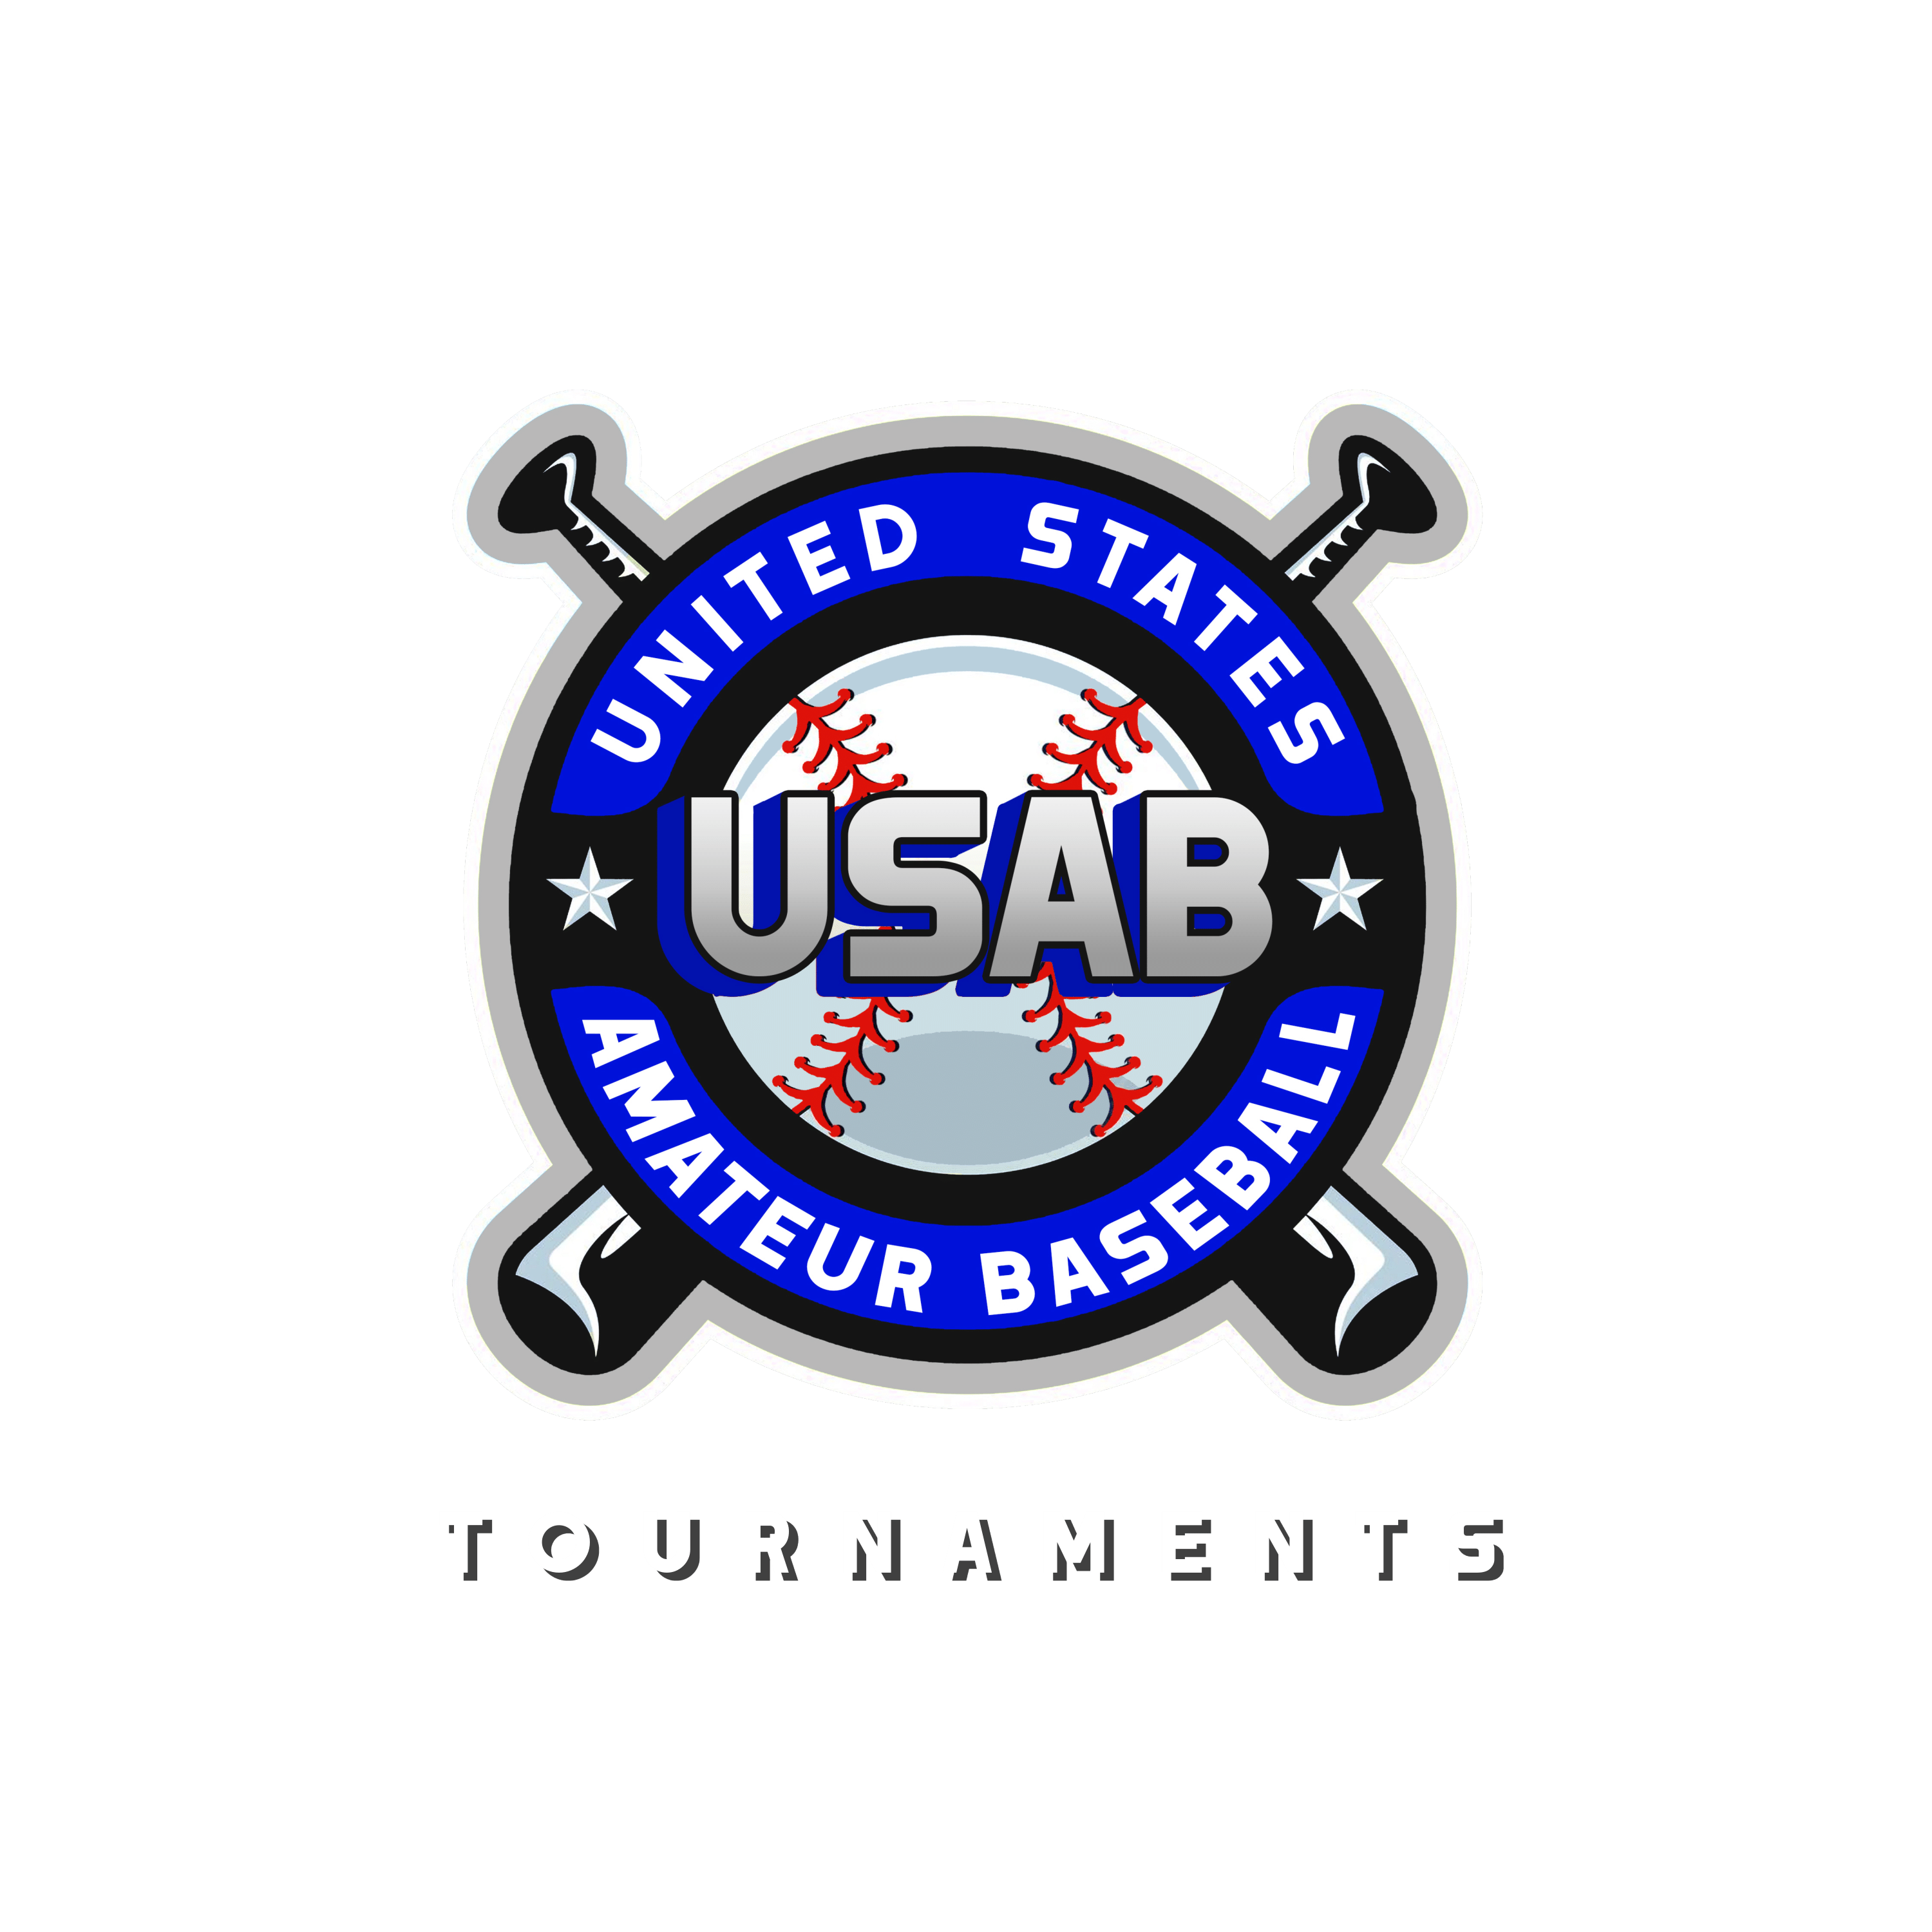 USAB Wood Bat REC BALL ONLY Tourney Logo